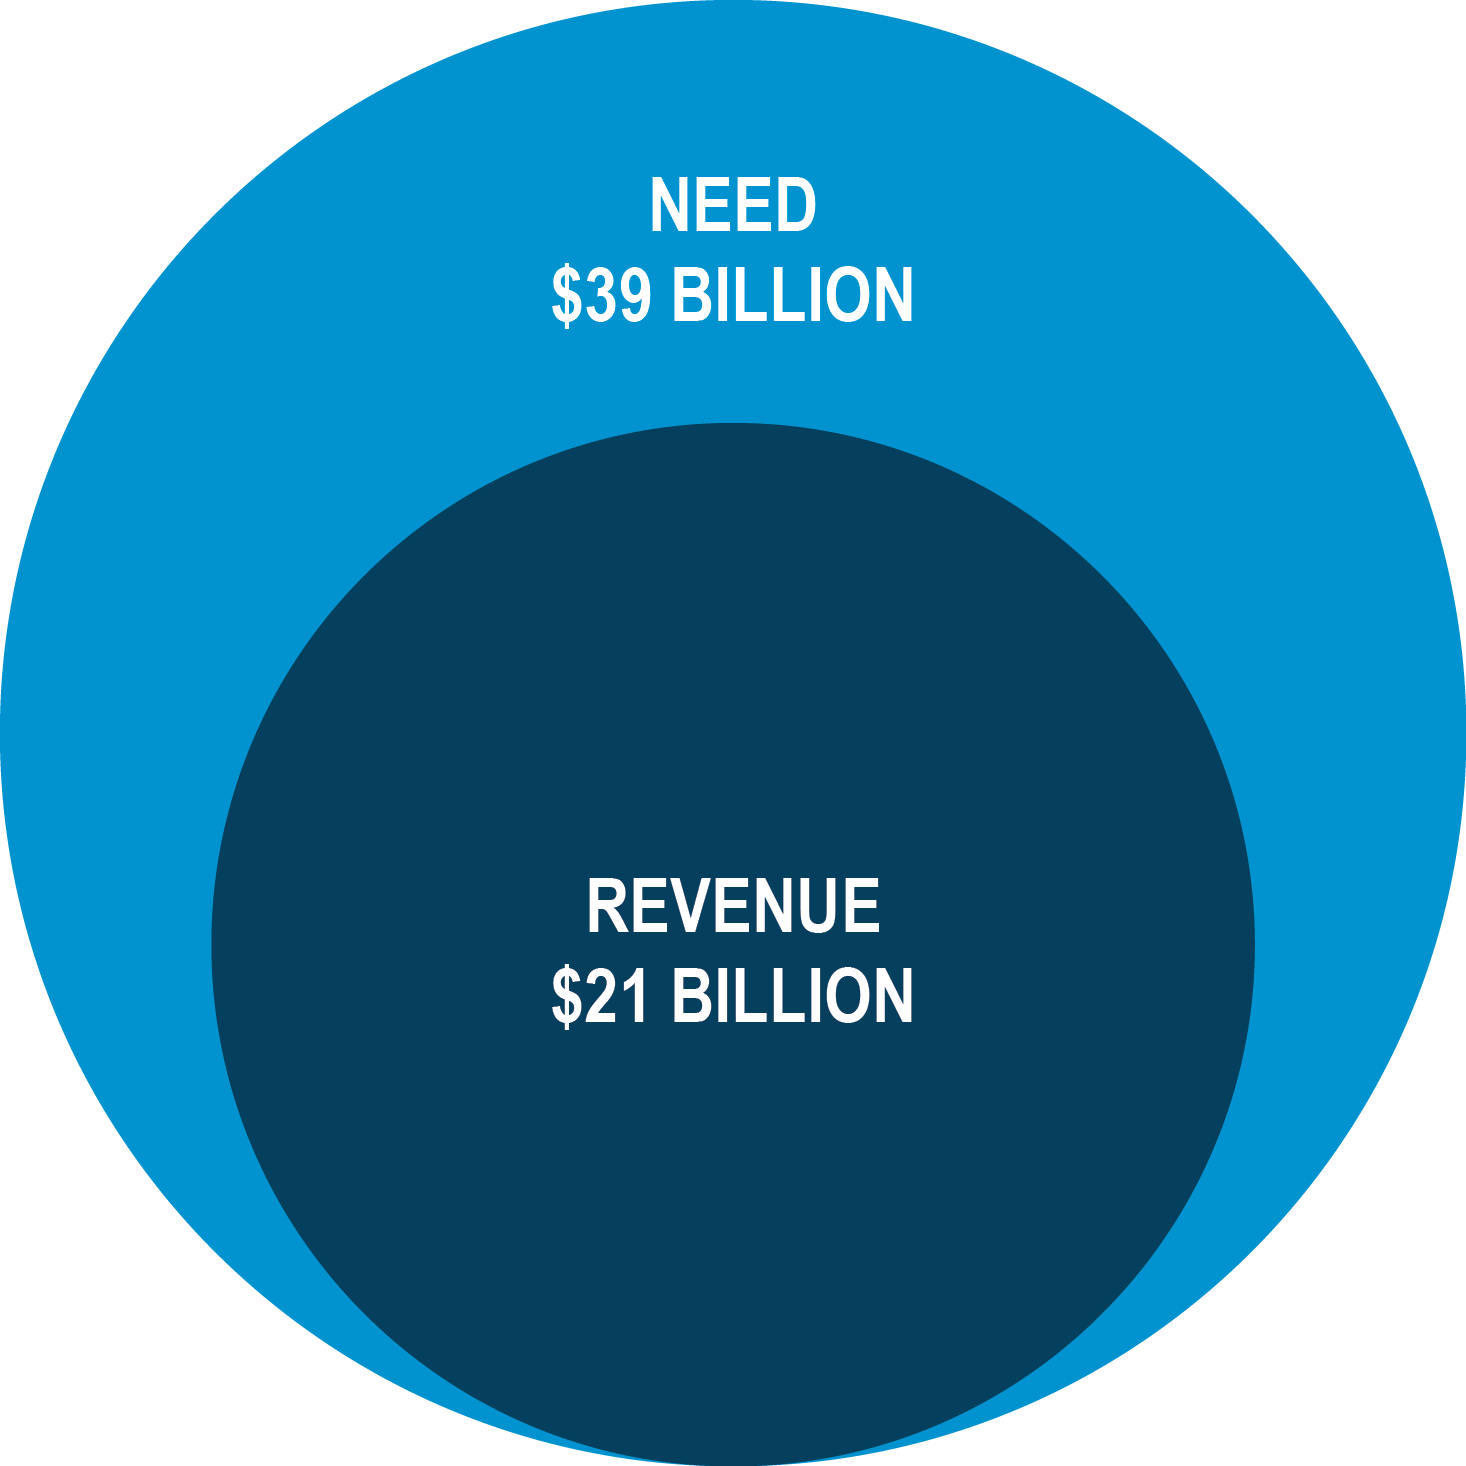 Need $39 billion, revenue $21 billion